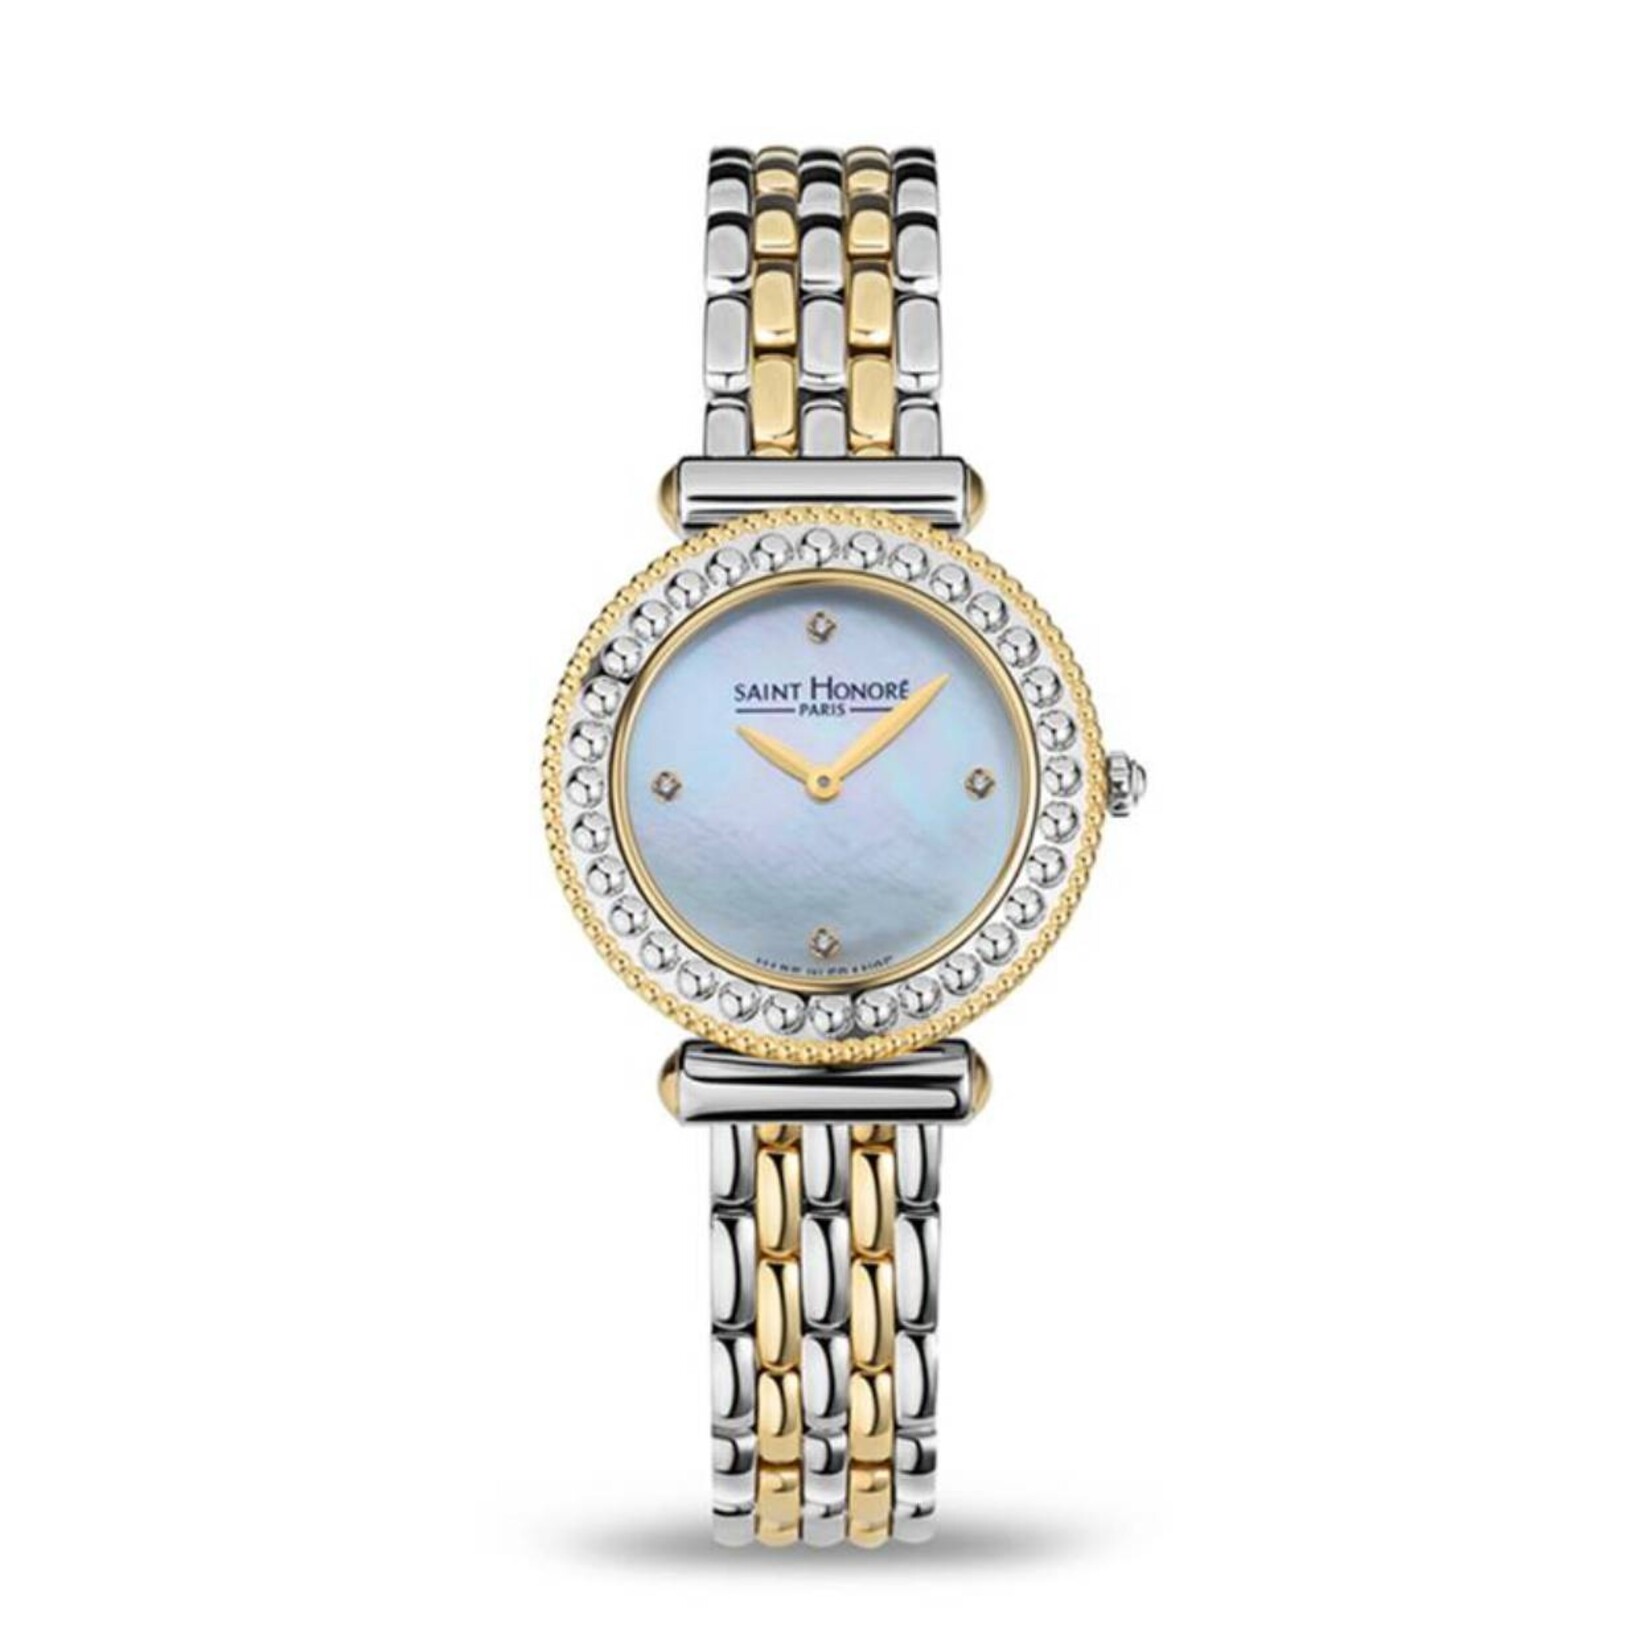 Saint Honoré Saint honoré gala horloge ga721164 4byd 0.02ct diamond